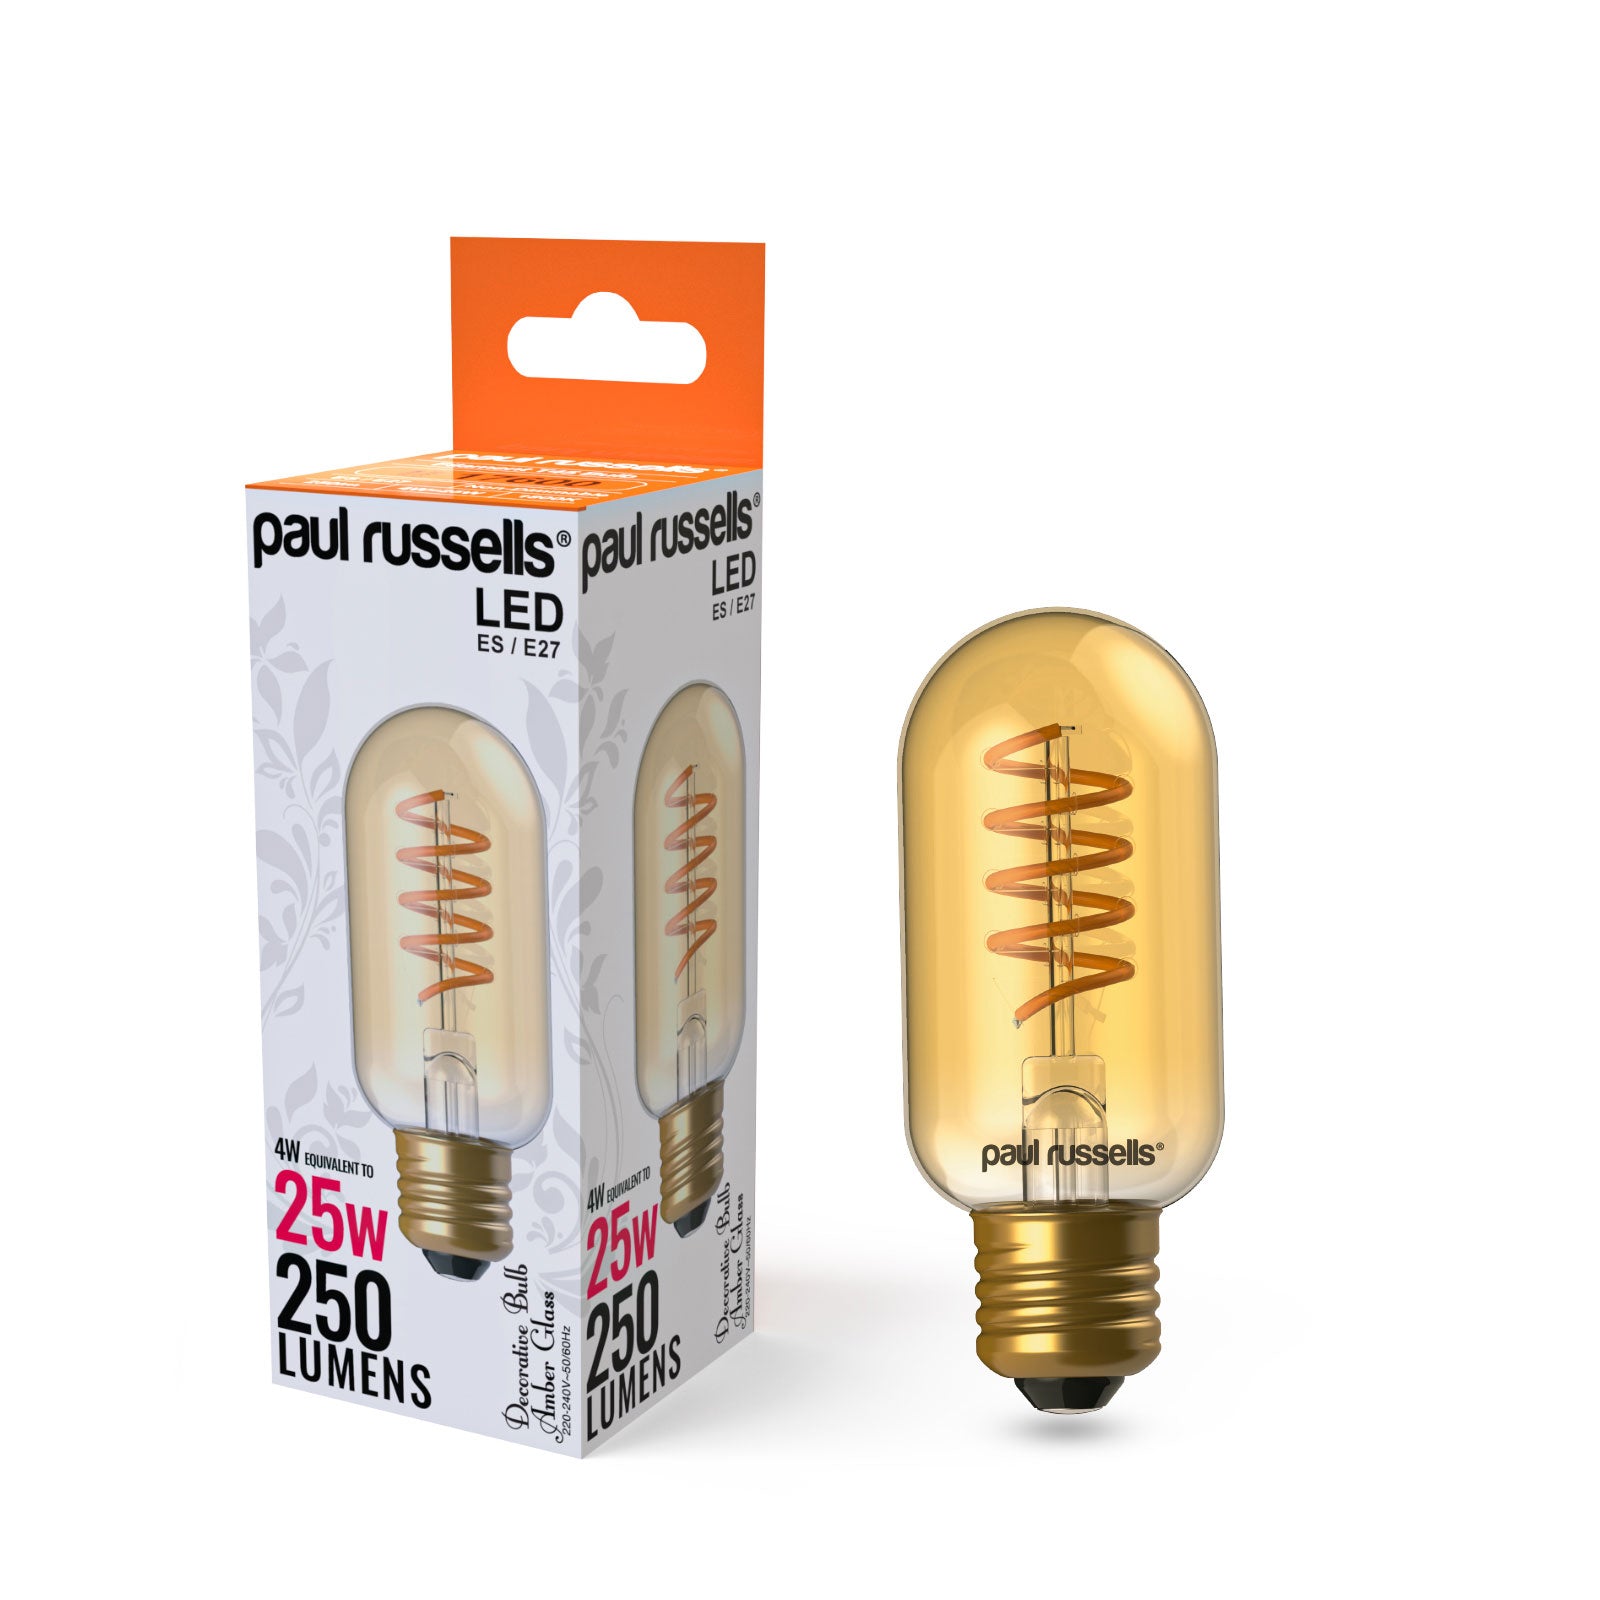 LED Spiral Antique T45 Amber Bulbs 25W, ES/E27, 250 Lumens, Extra Warm White (1800K), 240V